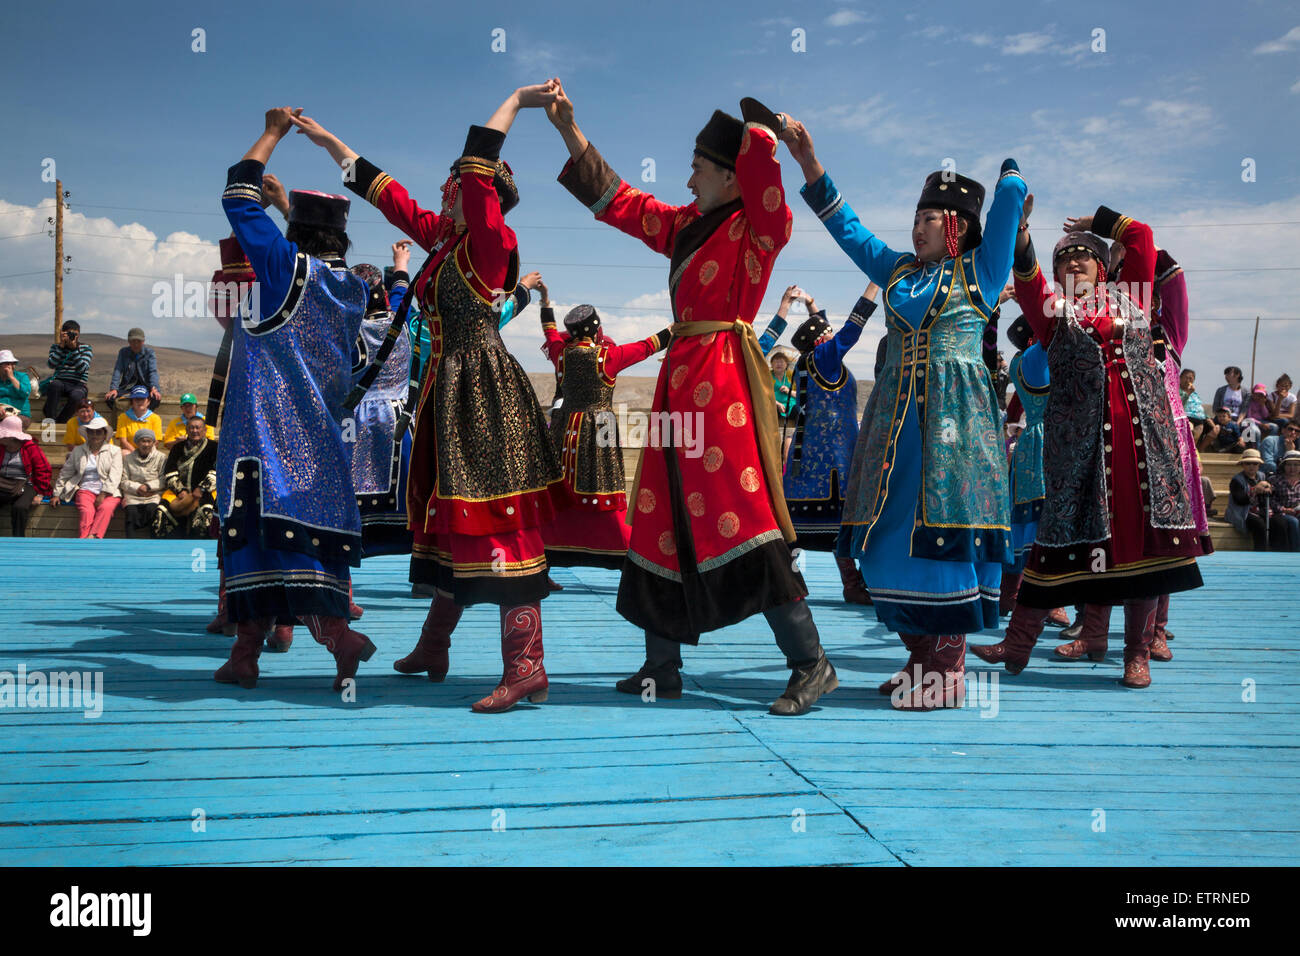 L'international etno-festival culturale Erdyn giochi (Erdyn Naadan) nella Regione di Irkutsk vicino al lago Baikal,Russia Credito: Nikolay Vinokurov/Alamy Live News Foto Stock